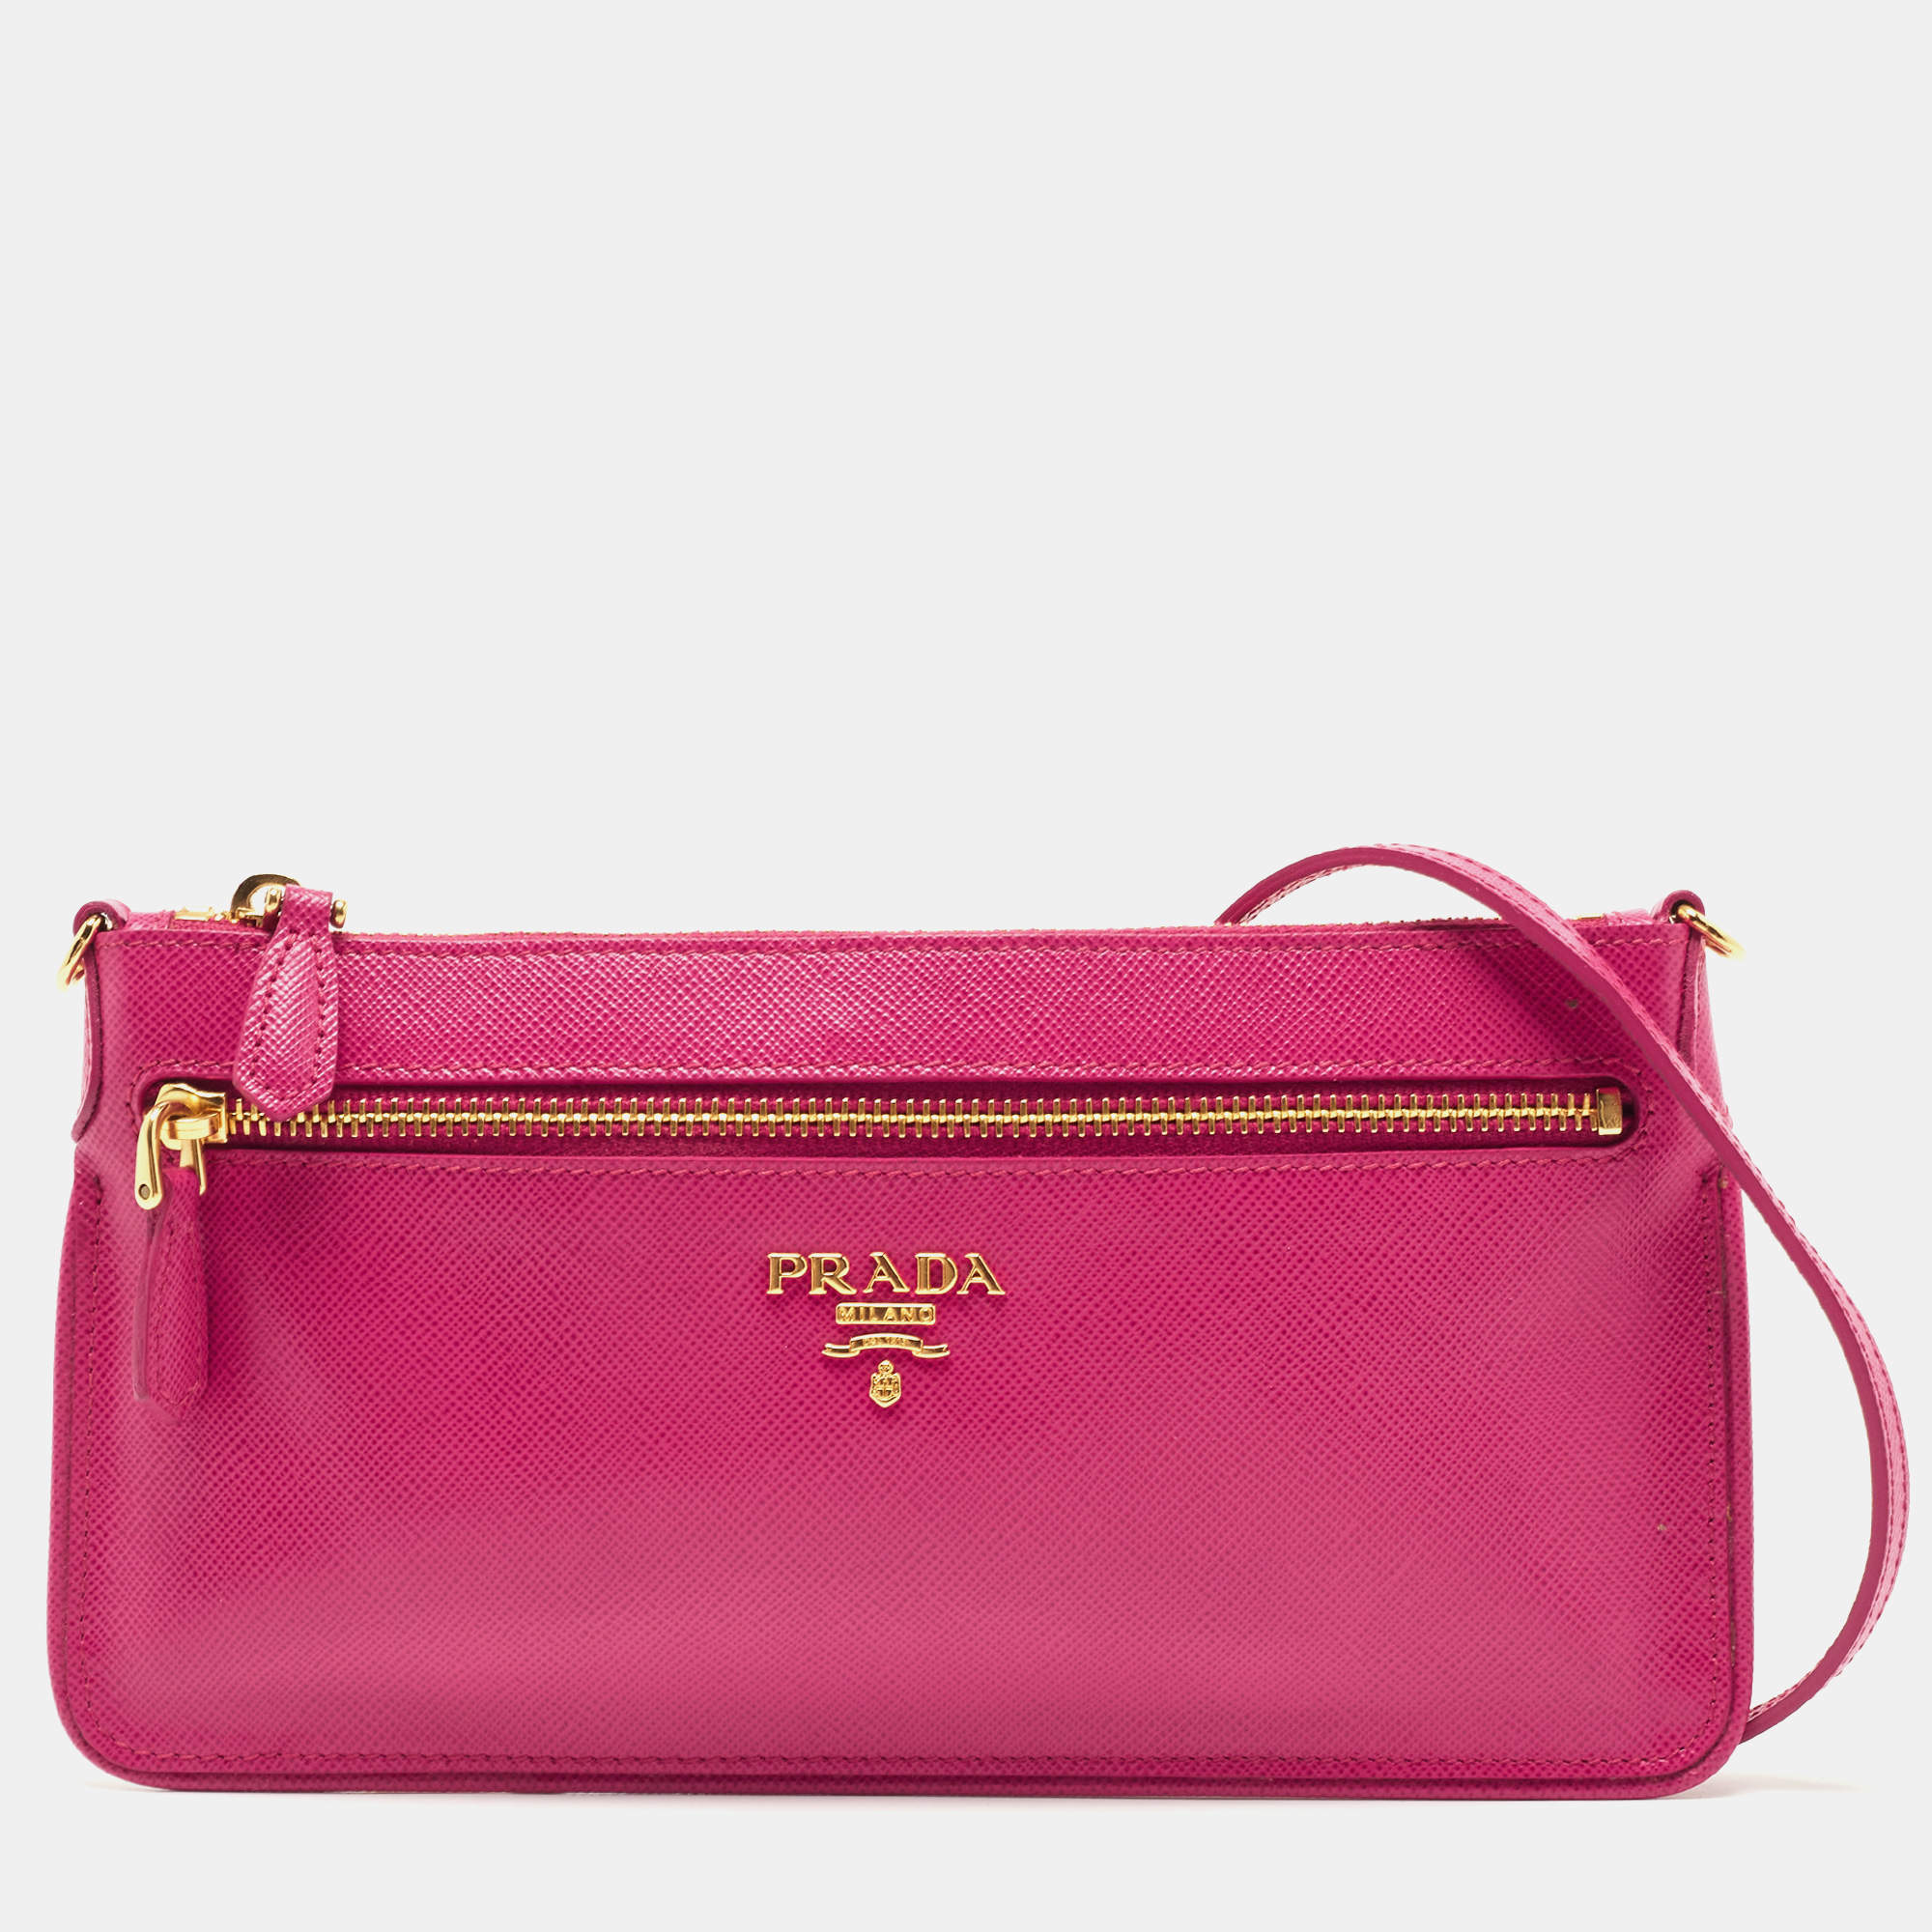 Prada Pink Handbag – Twice Upon a Time